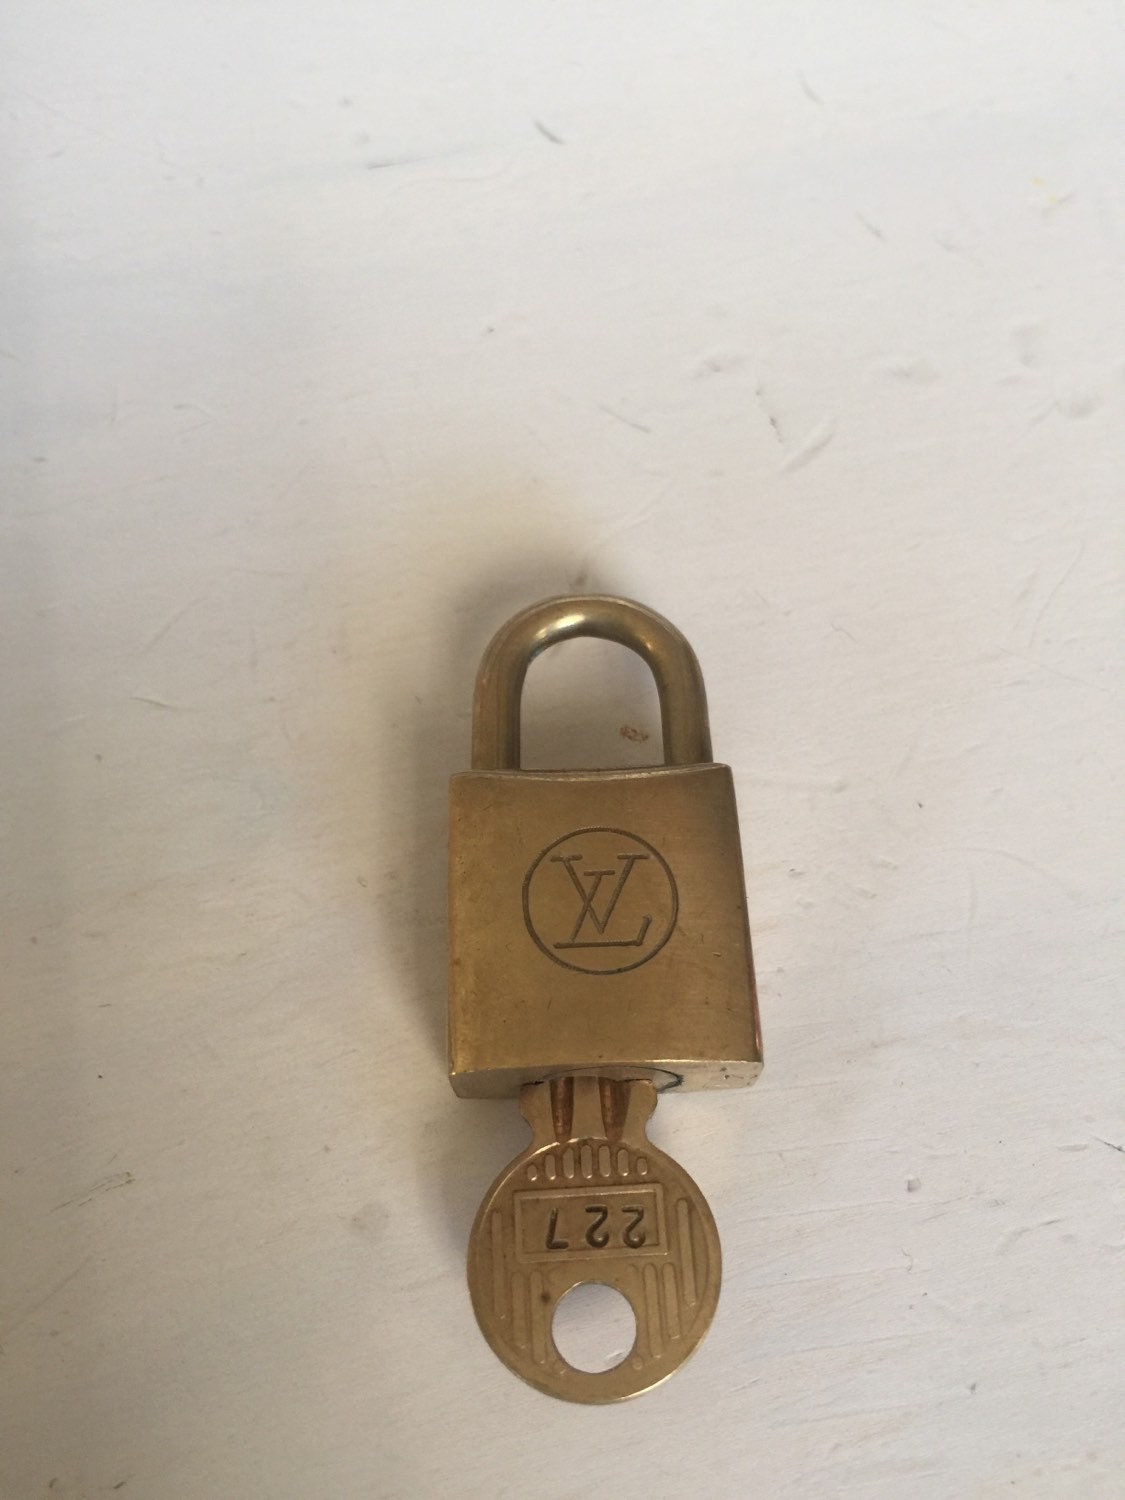 Louis Vuitton padlock and one key 227 lock brass